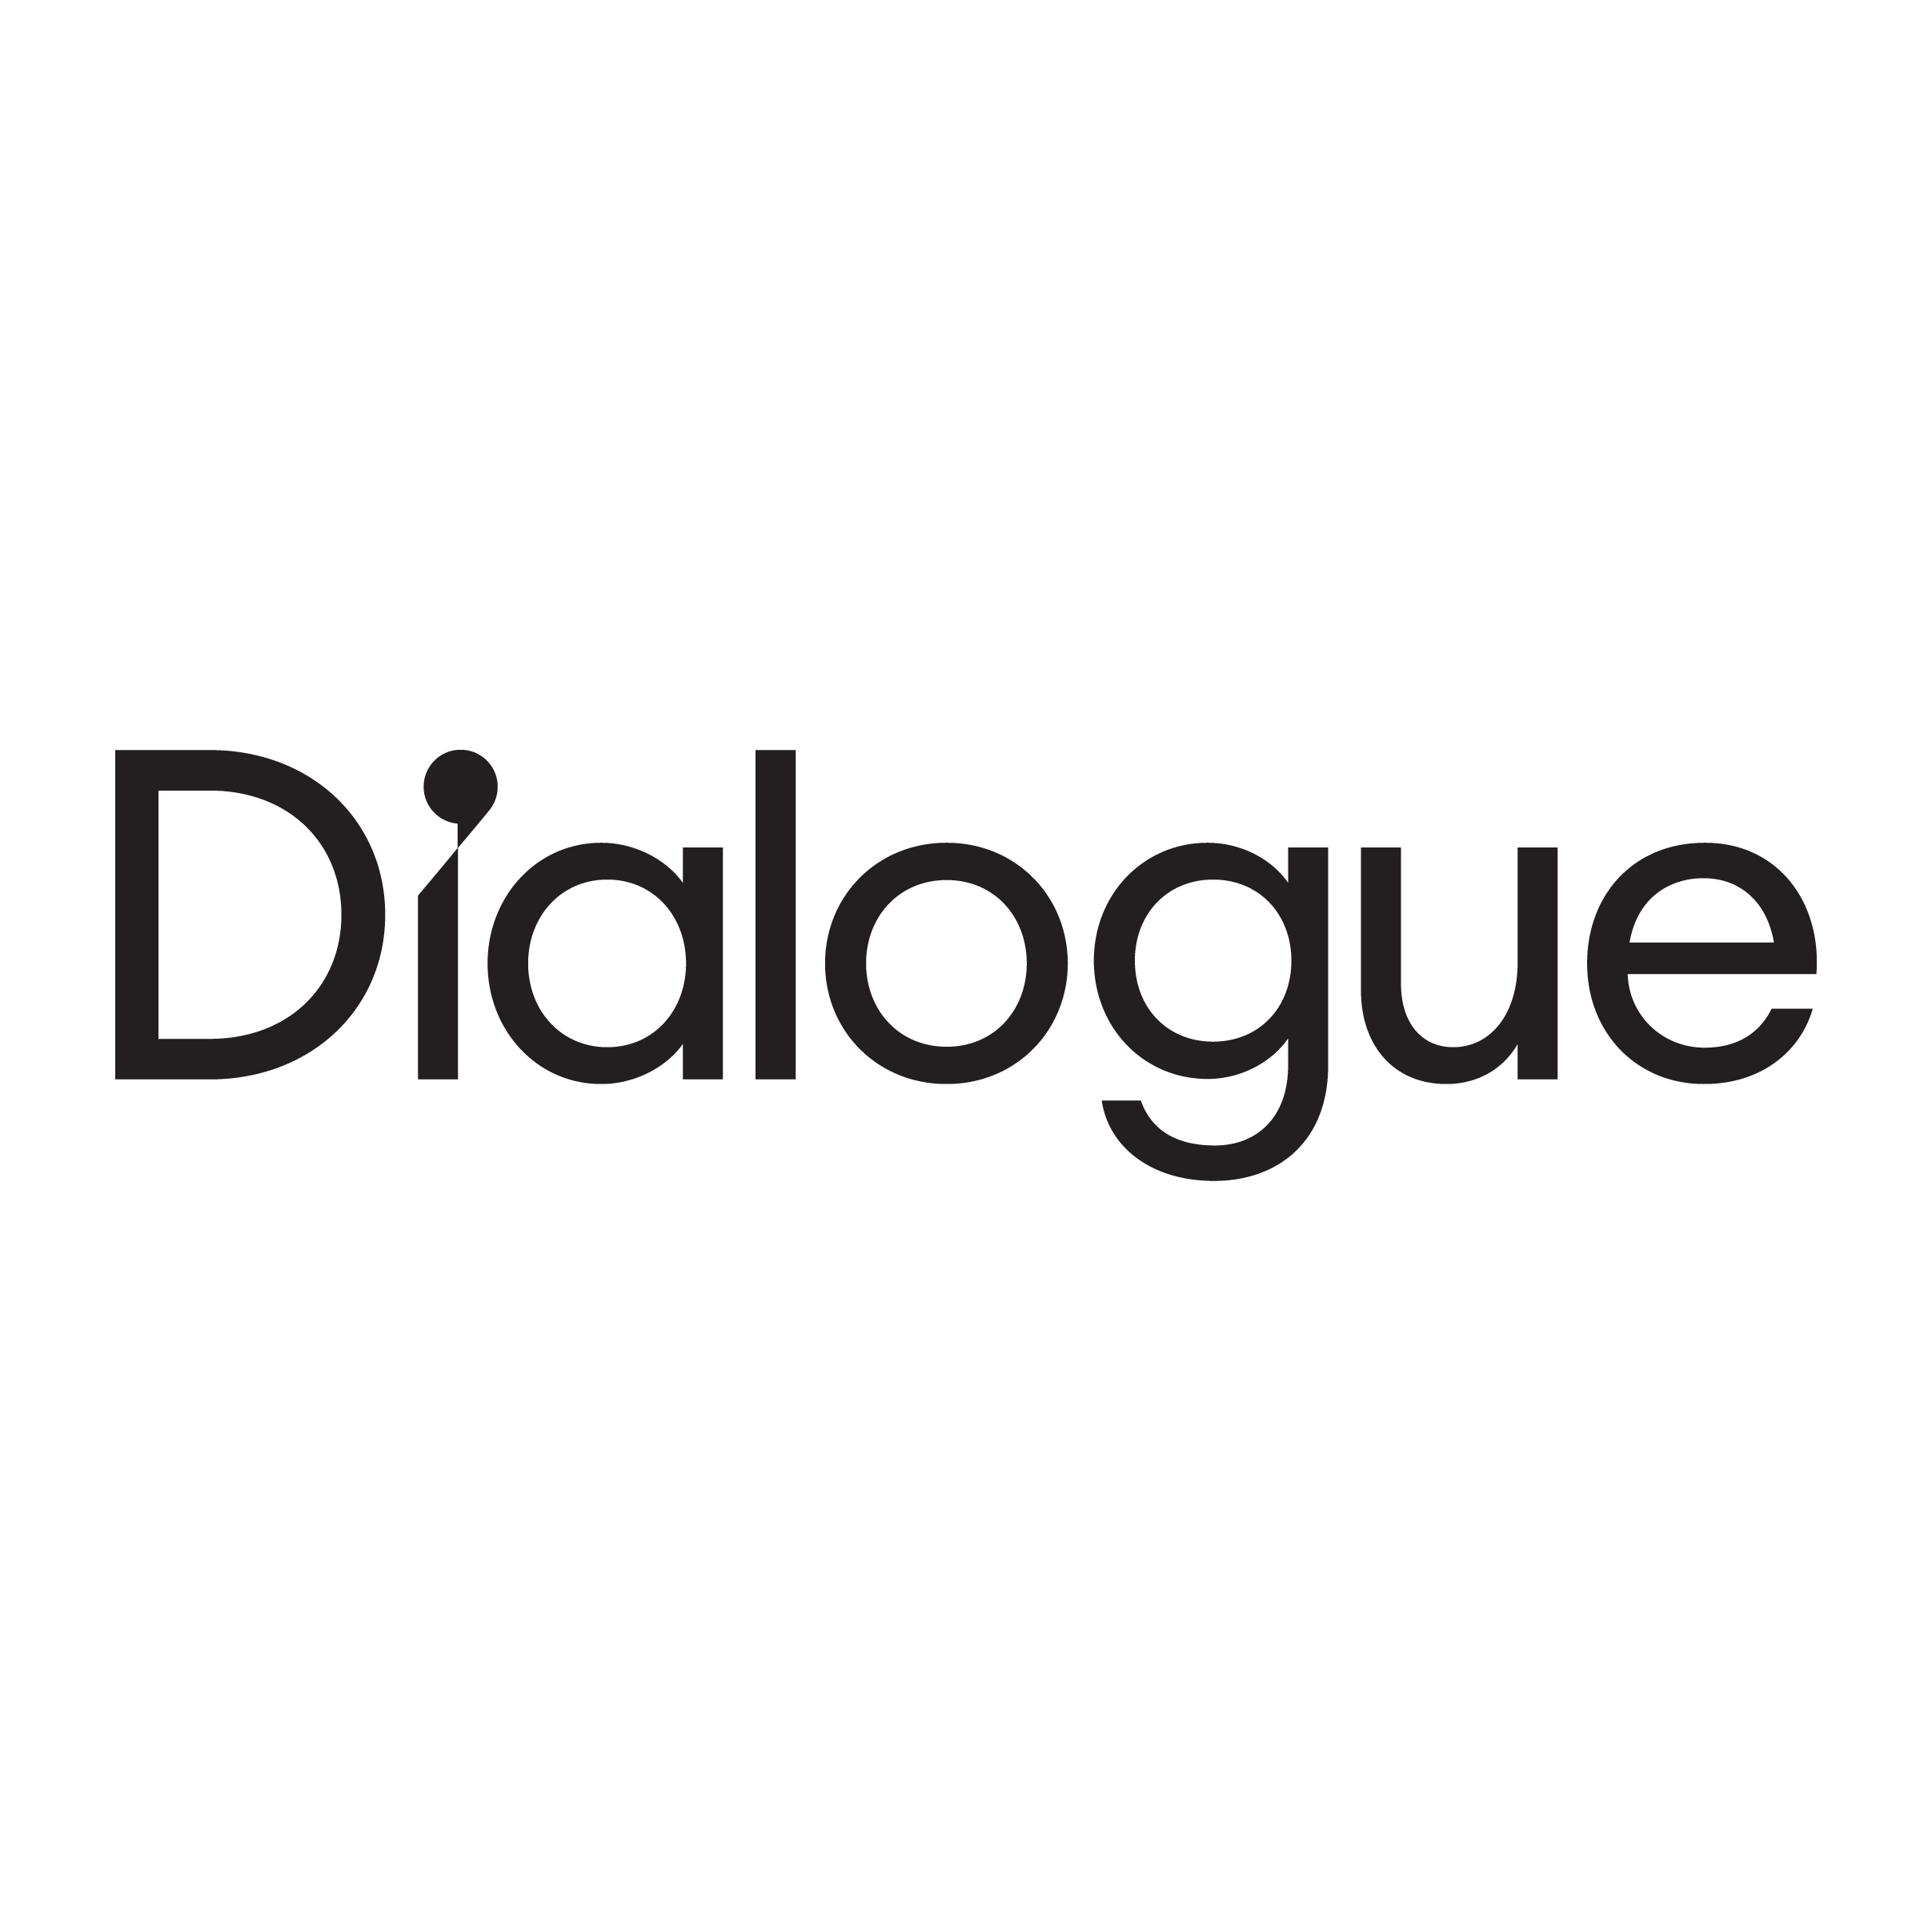 Dialogue Review